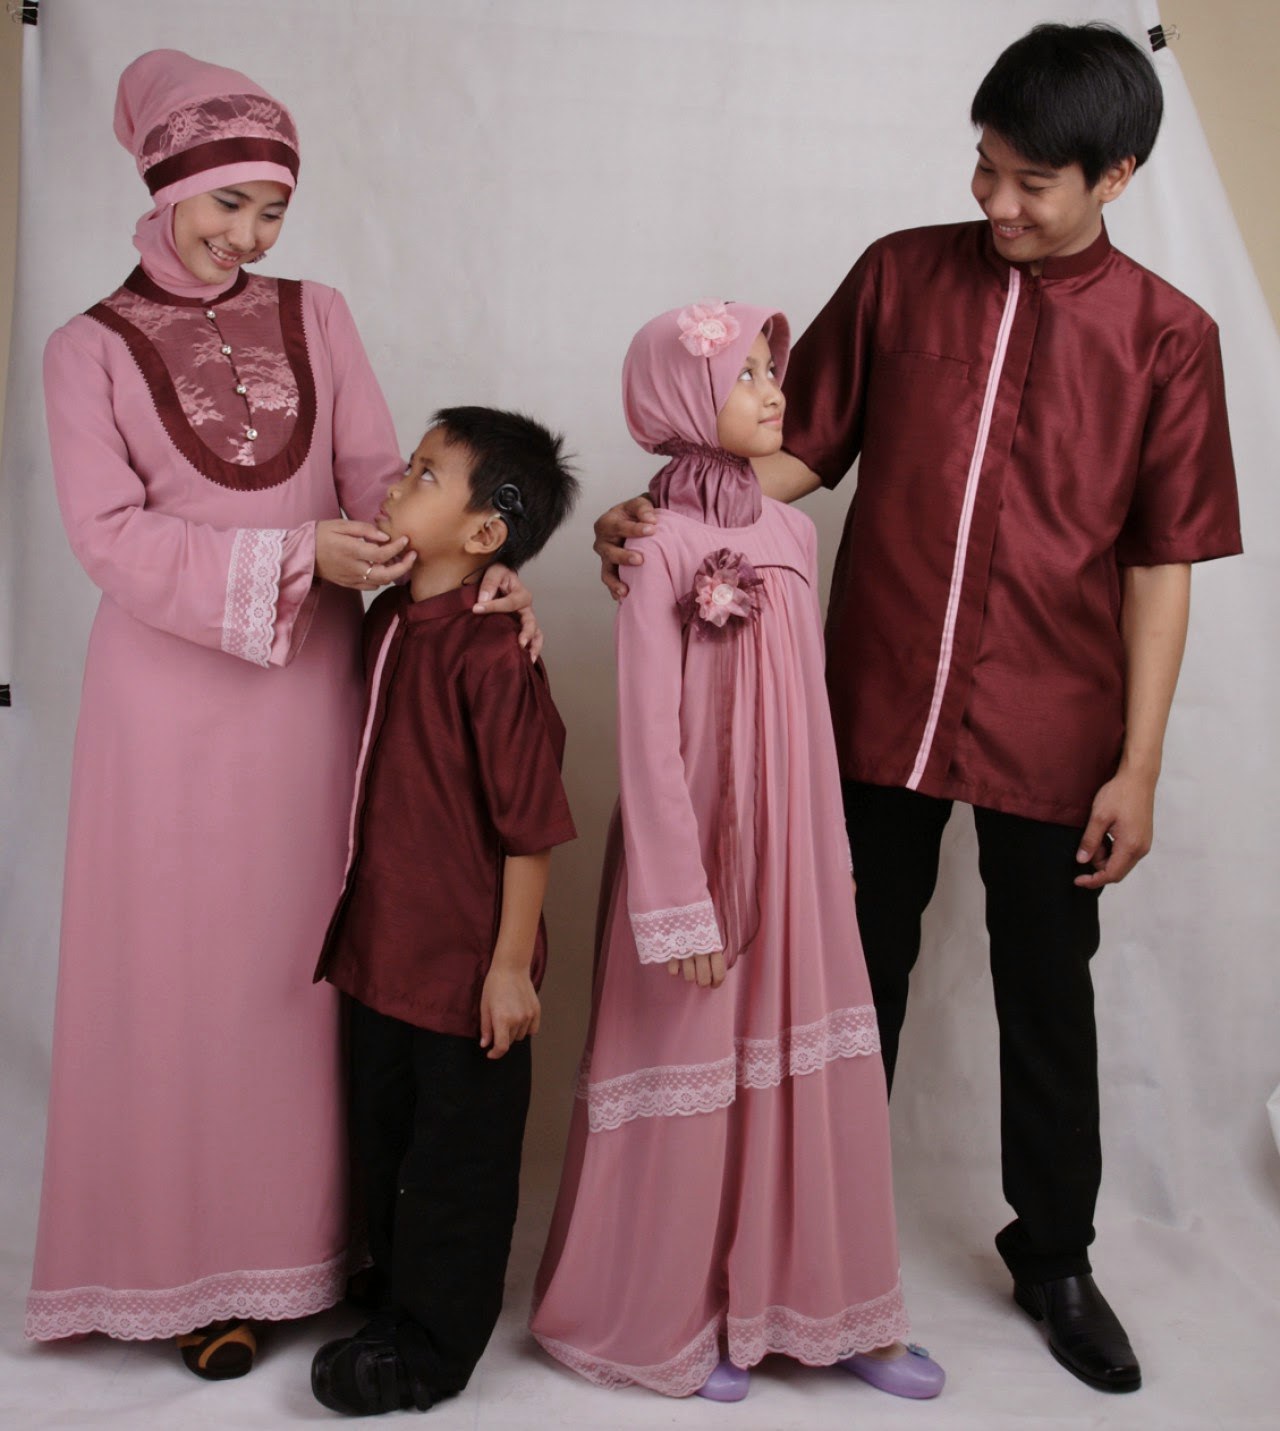 Ide Baju Lebaran Buat Keluarga Fmdf Model Baju Keluarga Muslim Seragam Kembar Terbaru 2018